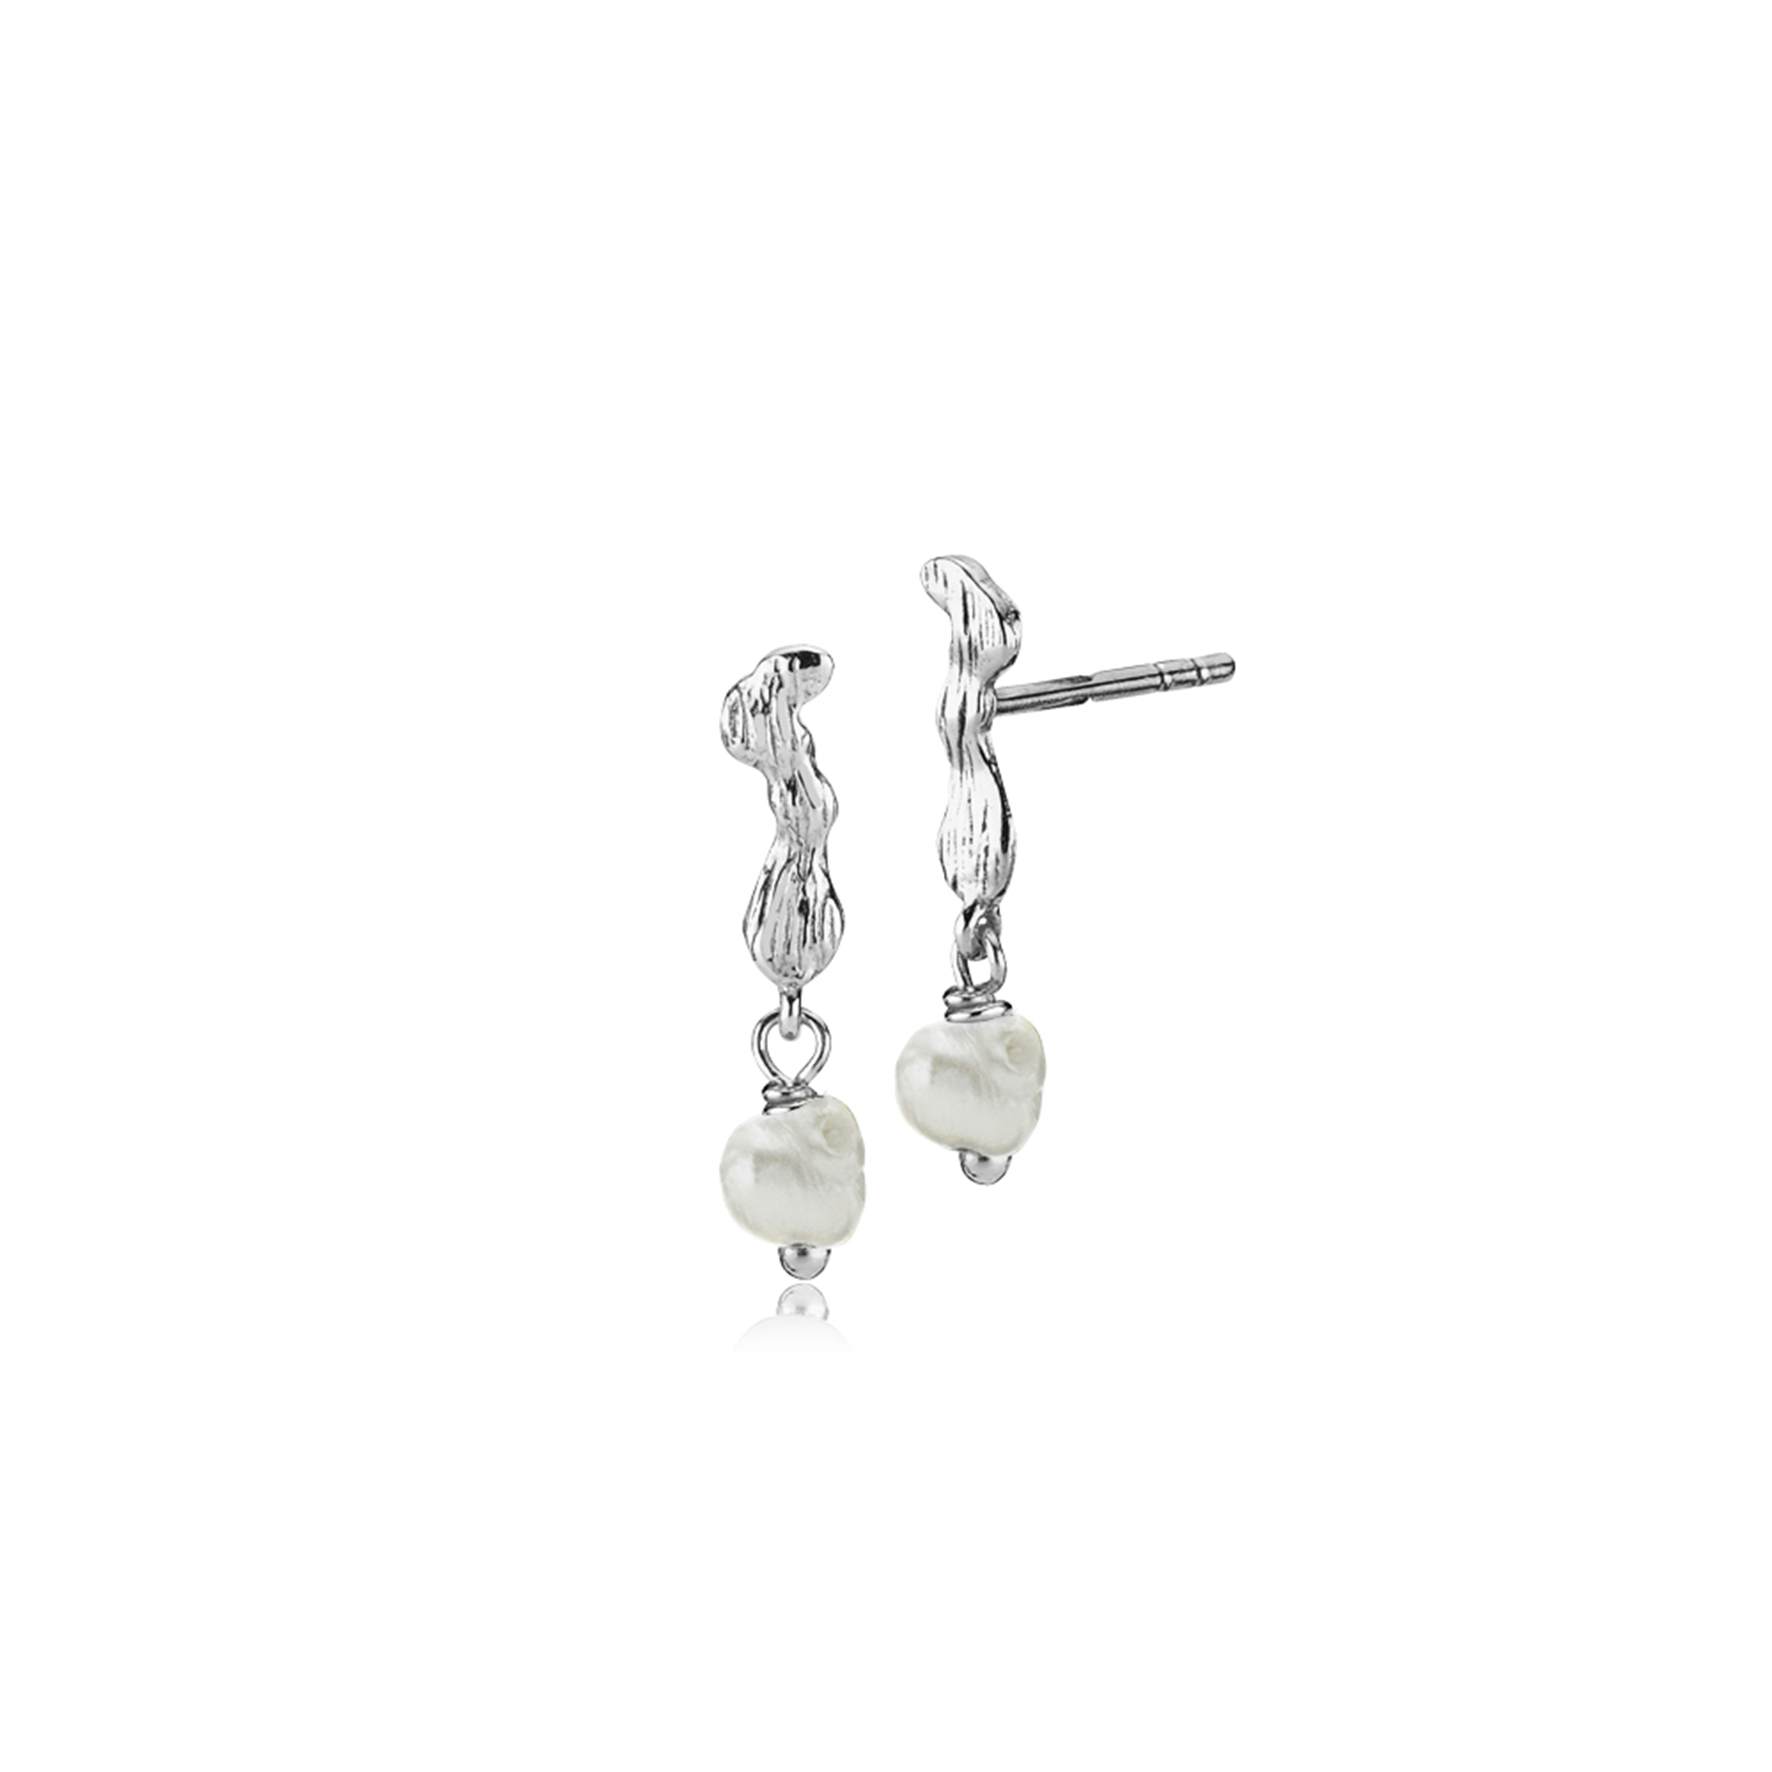 Lærke Bentsen By Sistie Earsticks With Pearls från Sistie i Silver Sterling 925|Freshwater Pearl